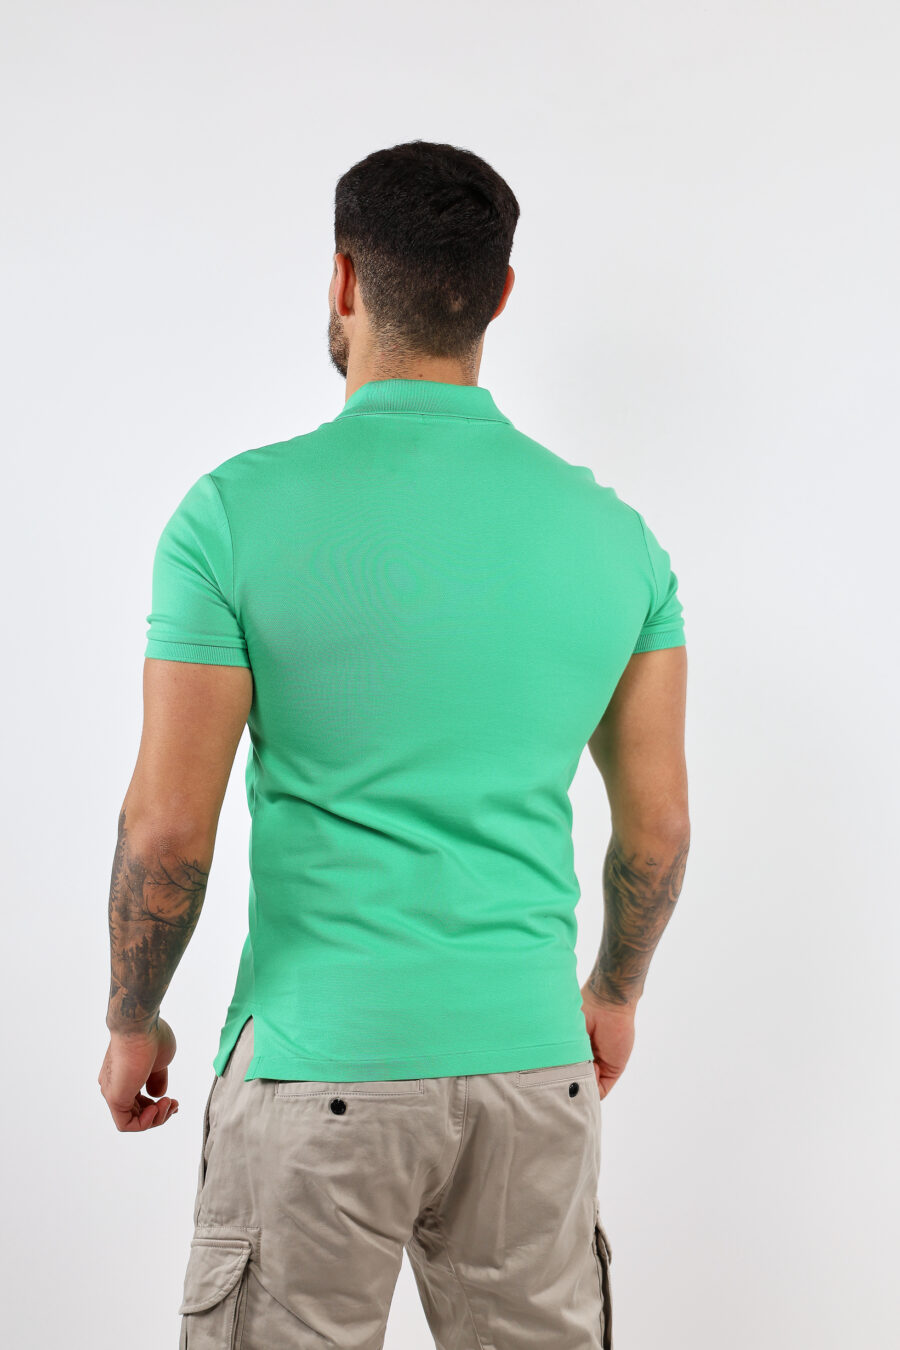 Camiseta verde y azul con minilogo "polo" - BLS Fashion 175